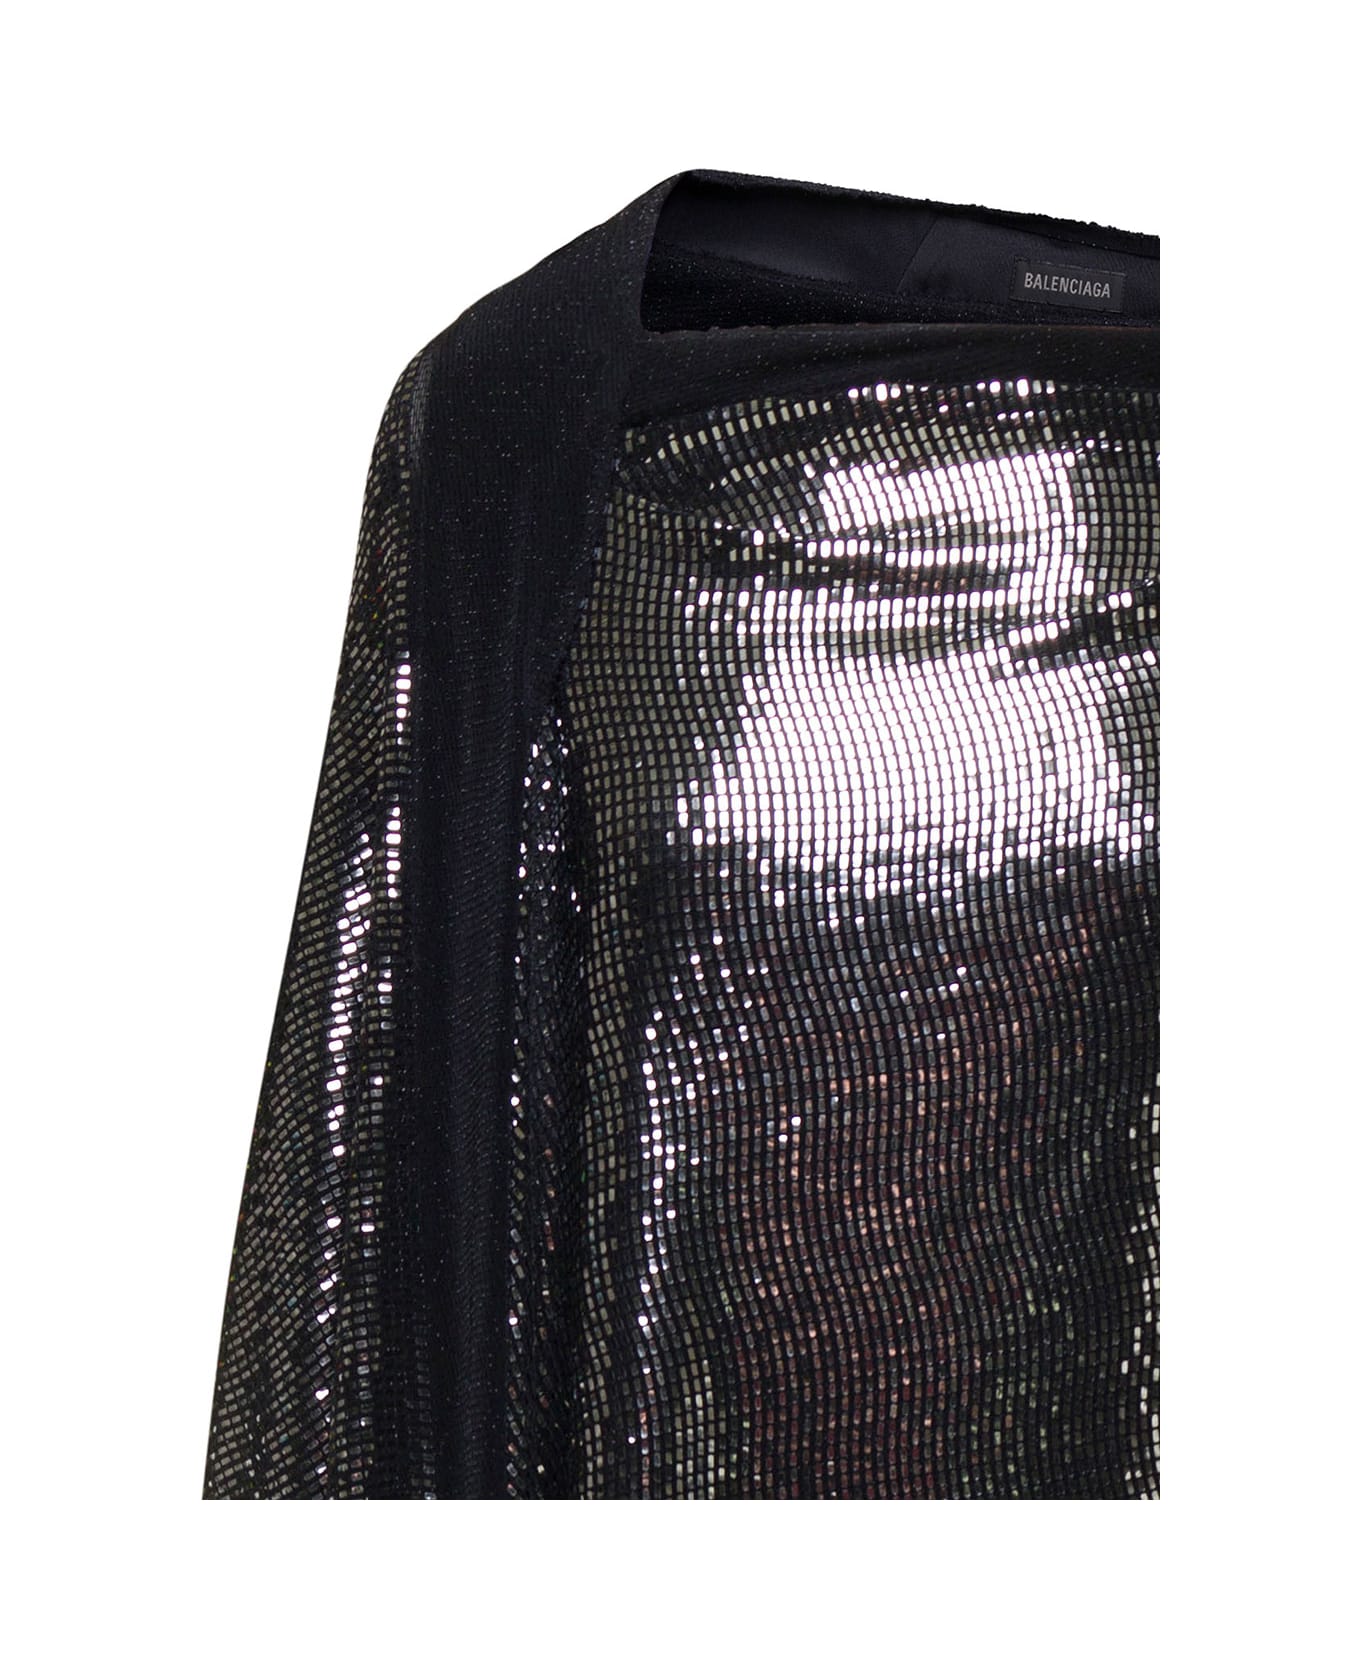 Balenciaga 'minimal' Black And Silver Draped Sleeveless Gown In Metallic Jersey Woman - Metallic